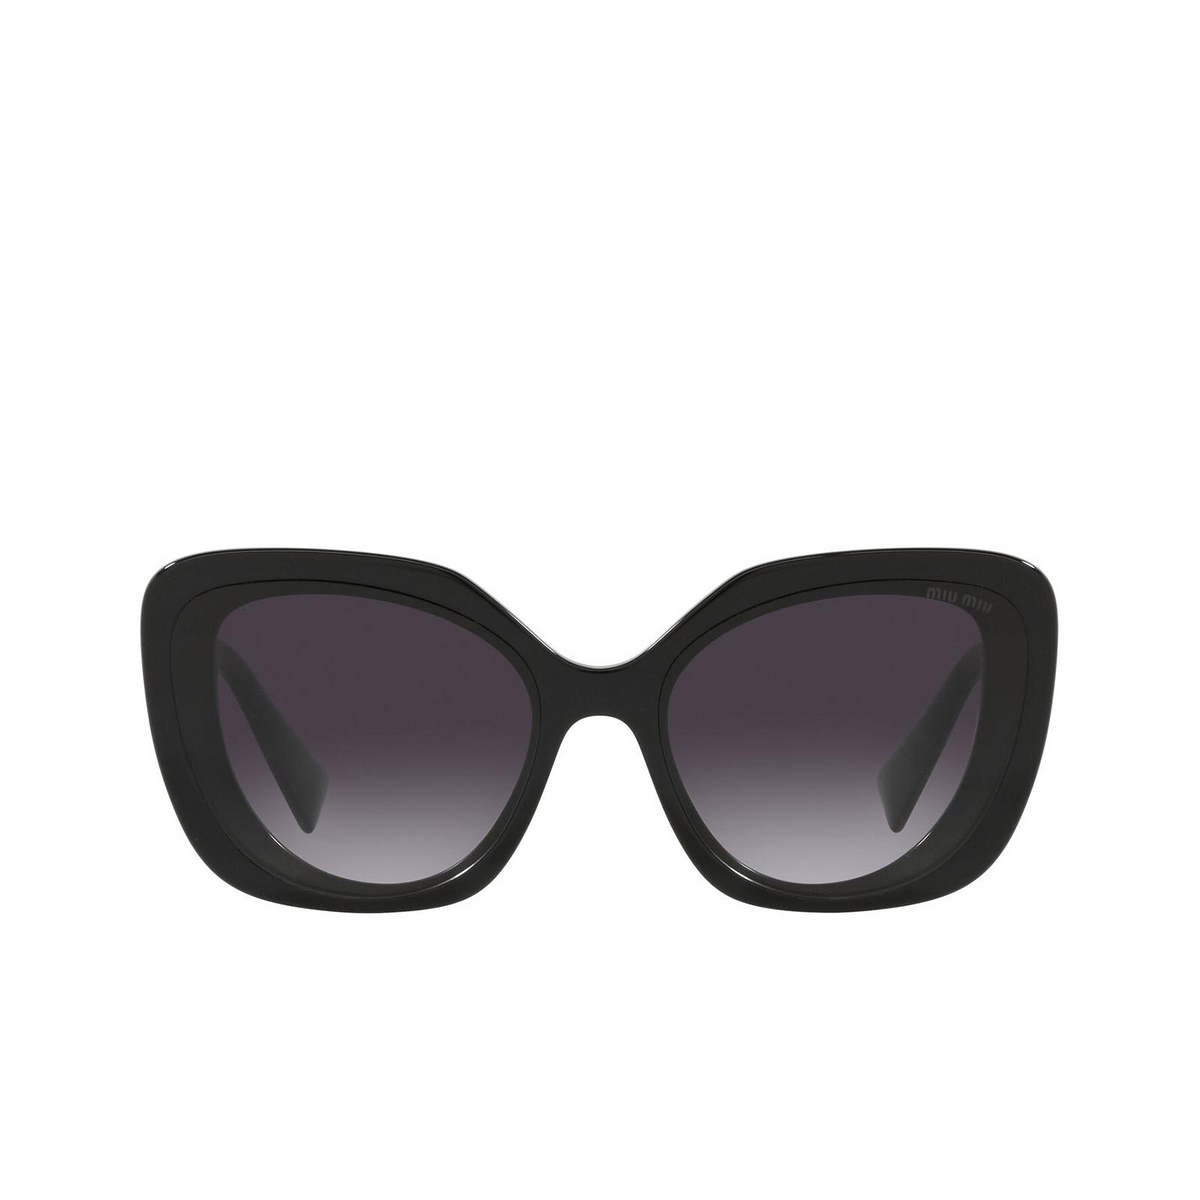 Miu Miu® Butterfly Sunglasses: MU 06XS color Crystal Black 03I5D1 - front view.